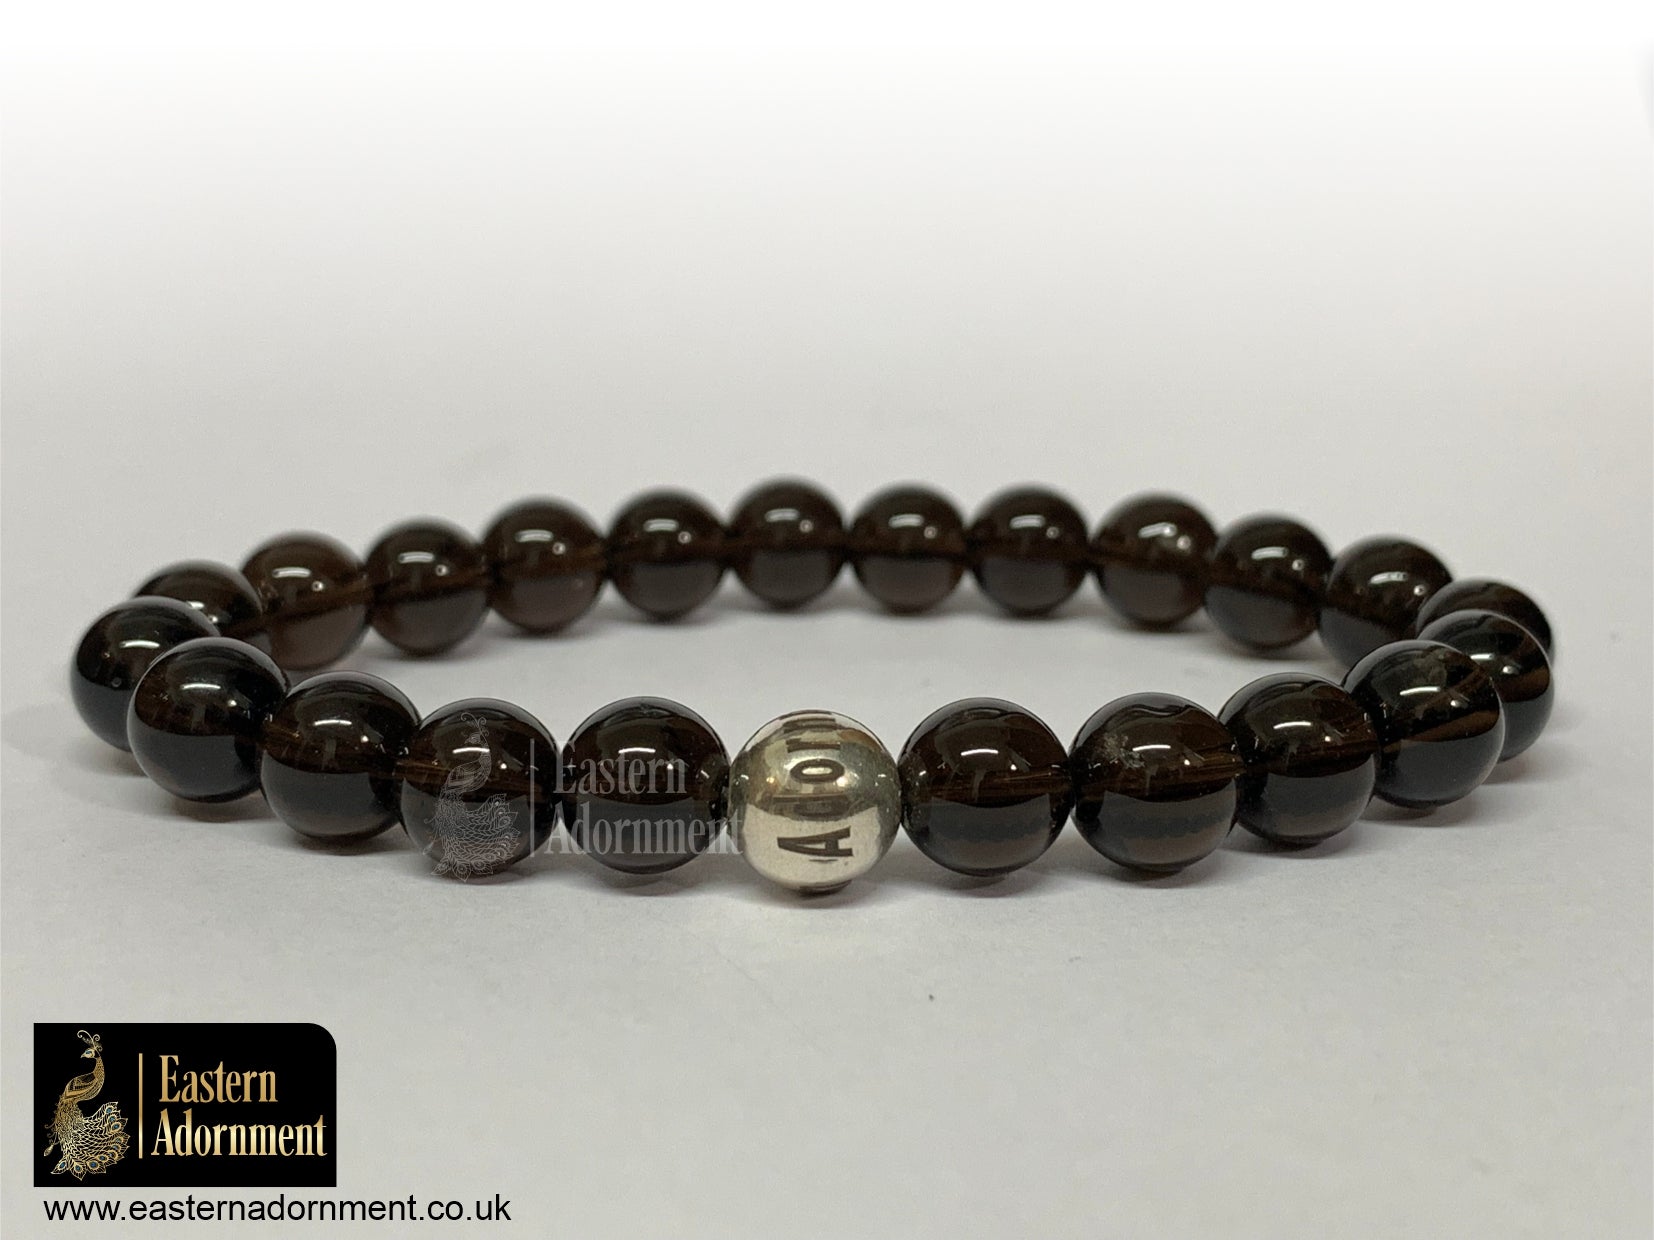 Deep brown Smoky Quartz bead bracelet, with Eastern Adornment branded silver bead.